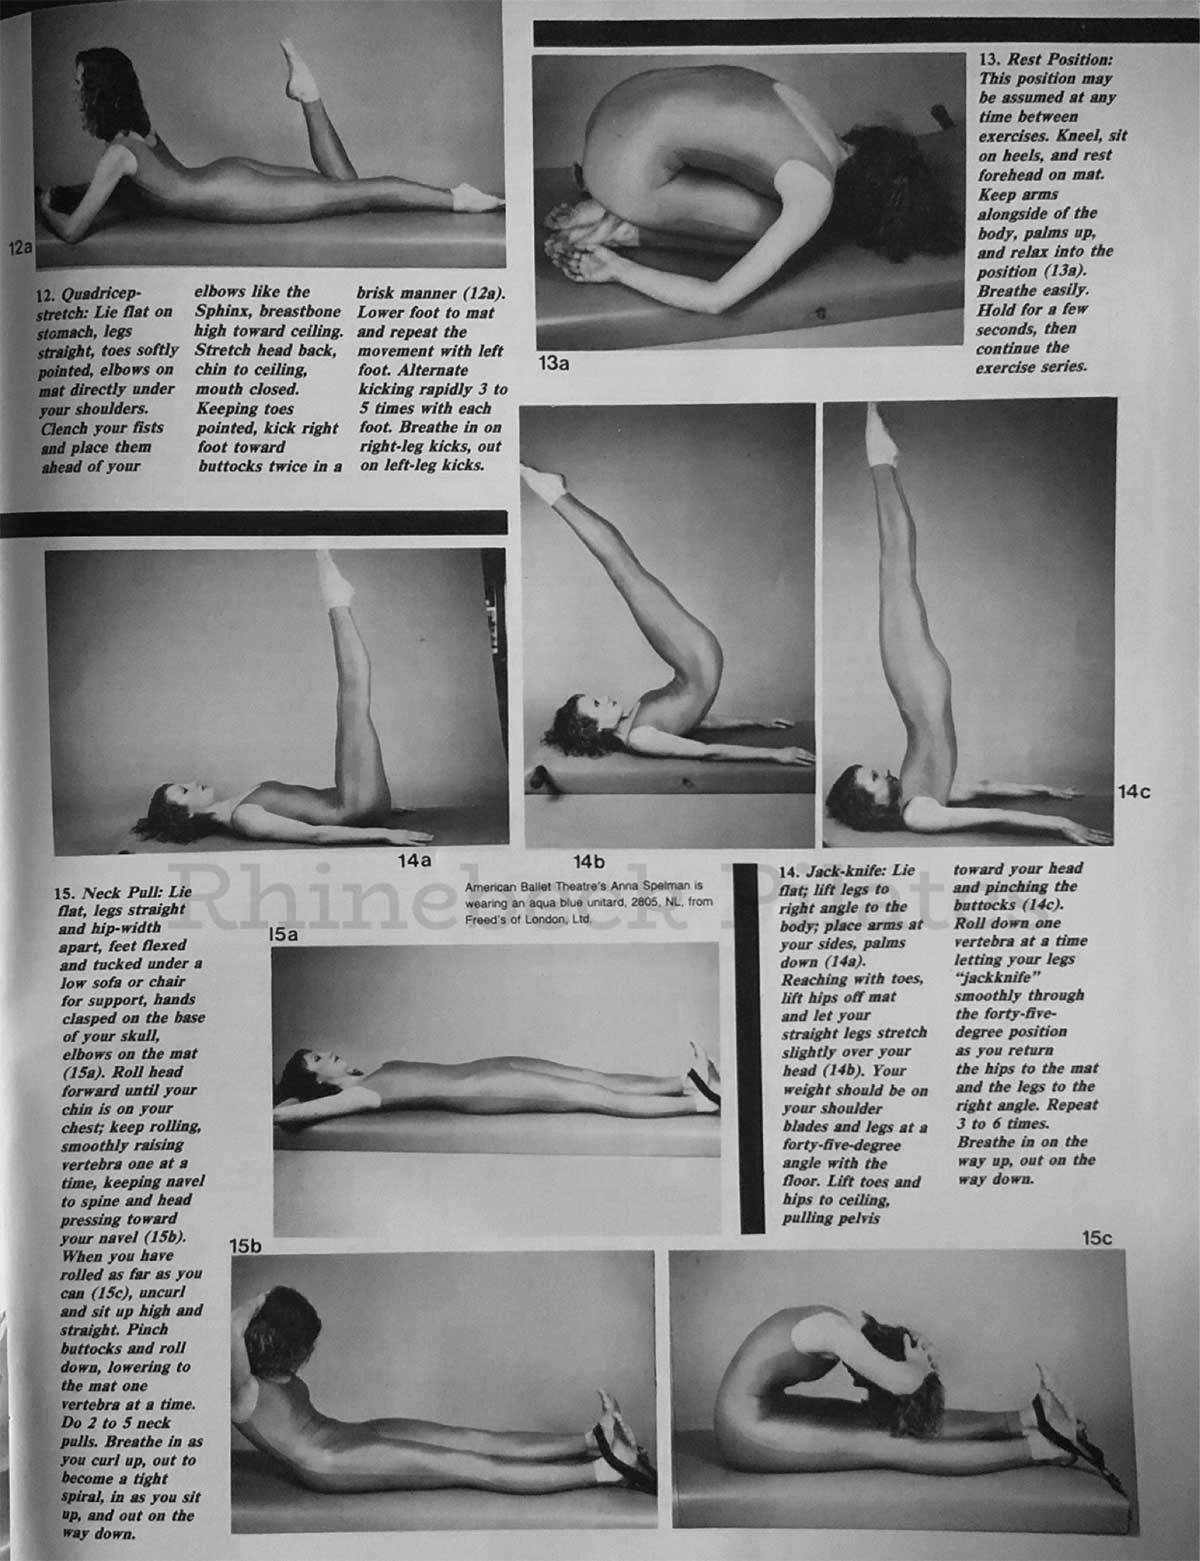 "Pilates Power" Romana Kryzanowska pilates archive article